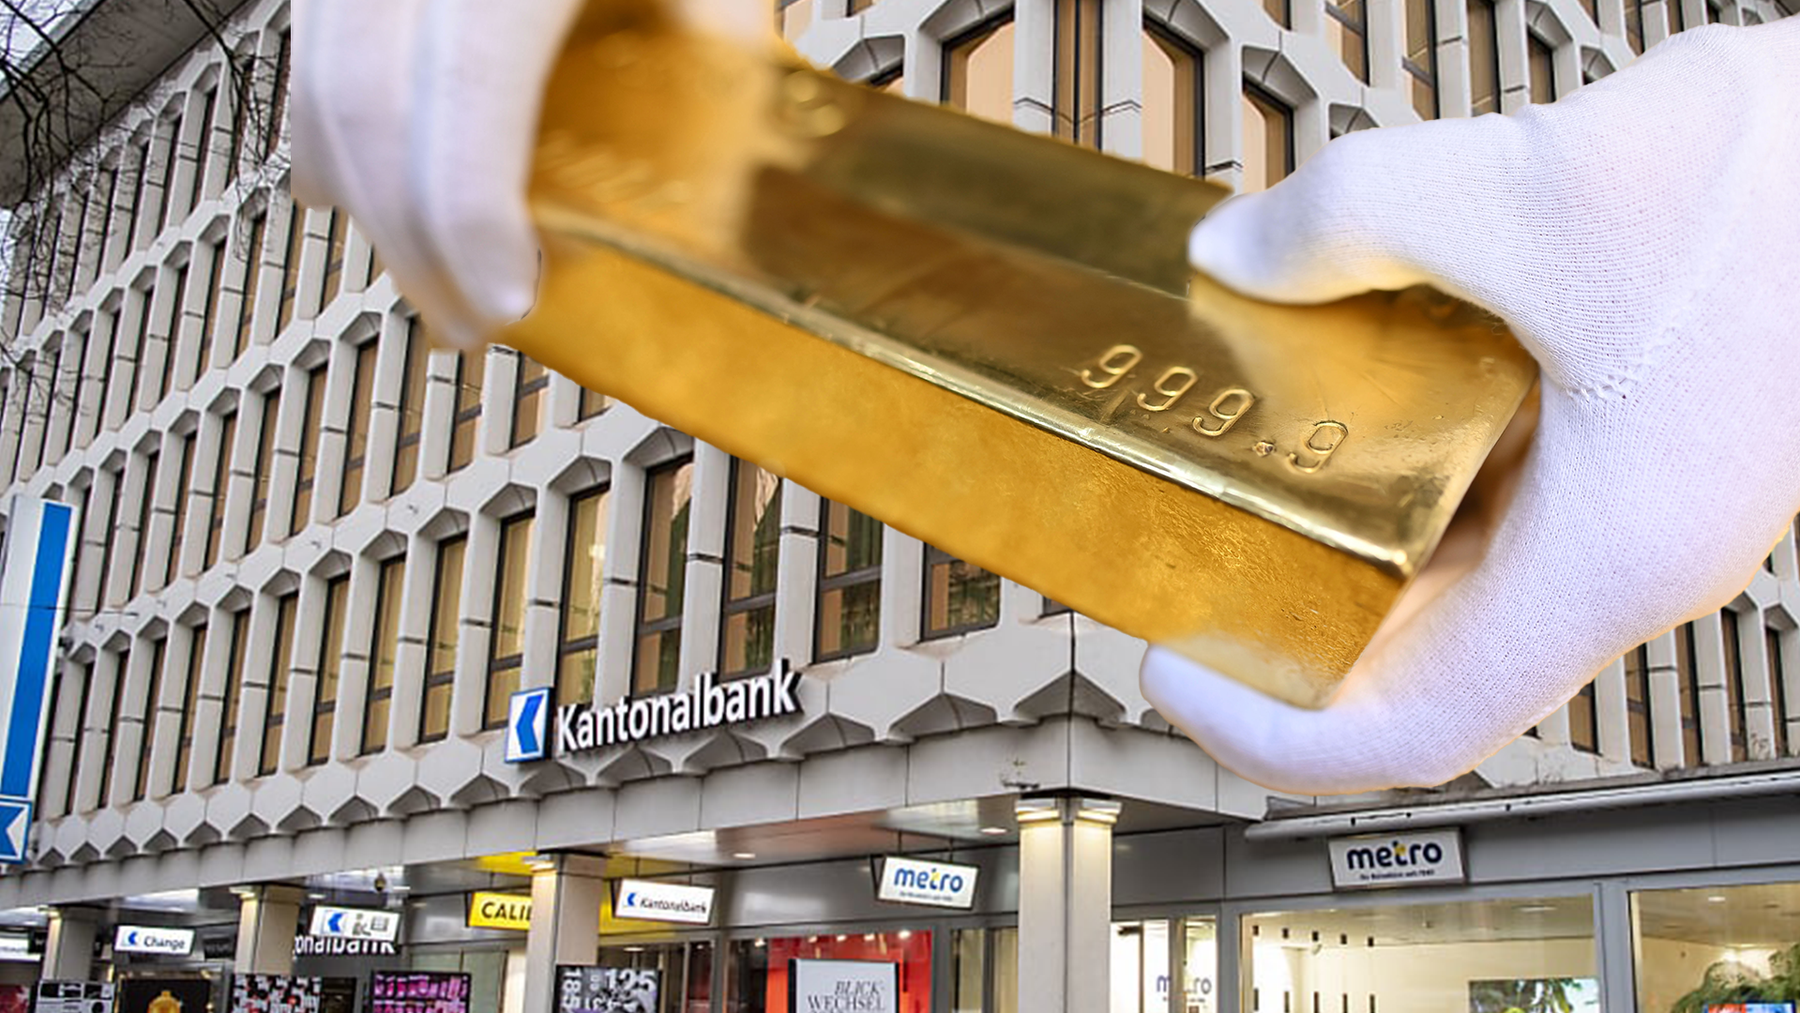 Gold Kantonalbank lma